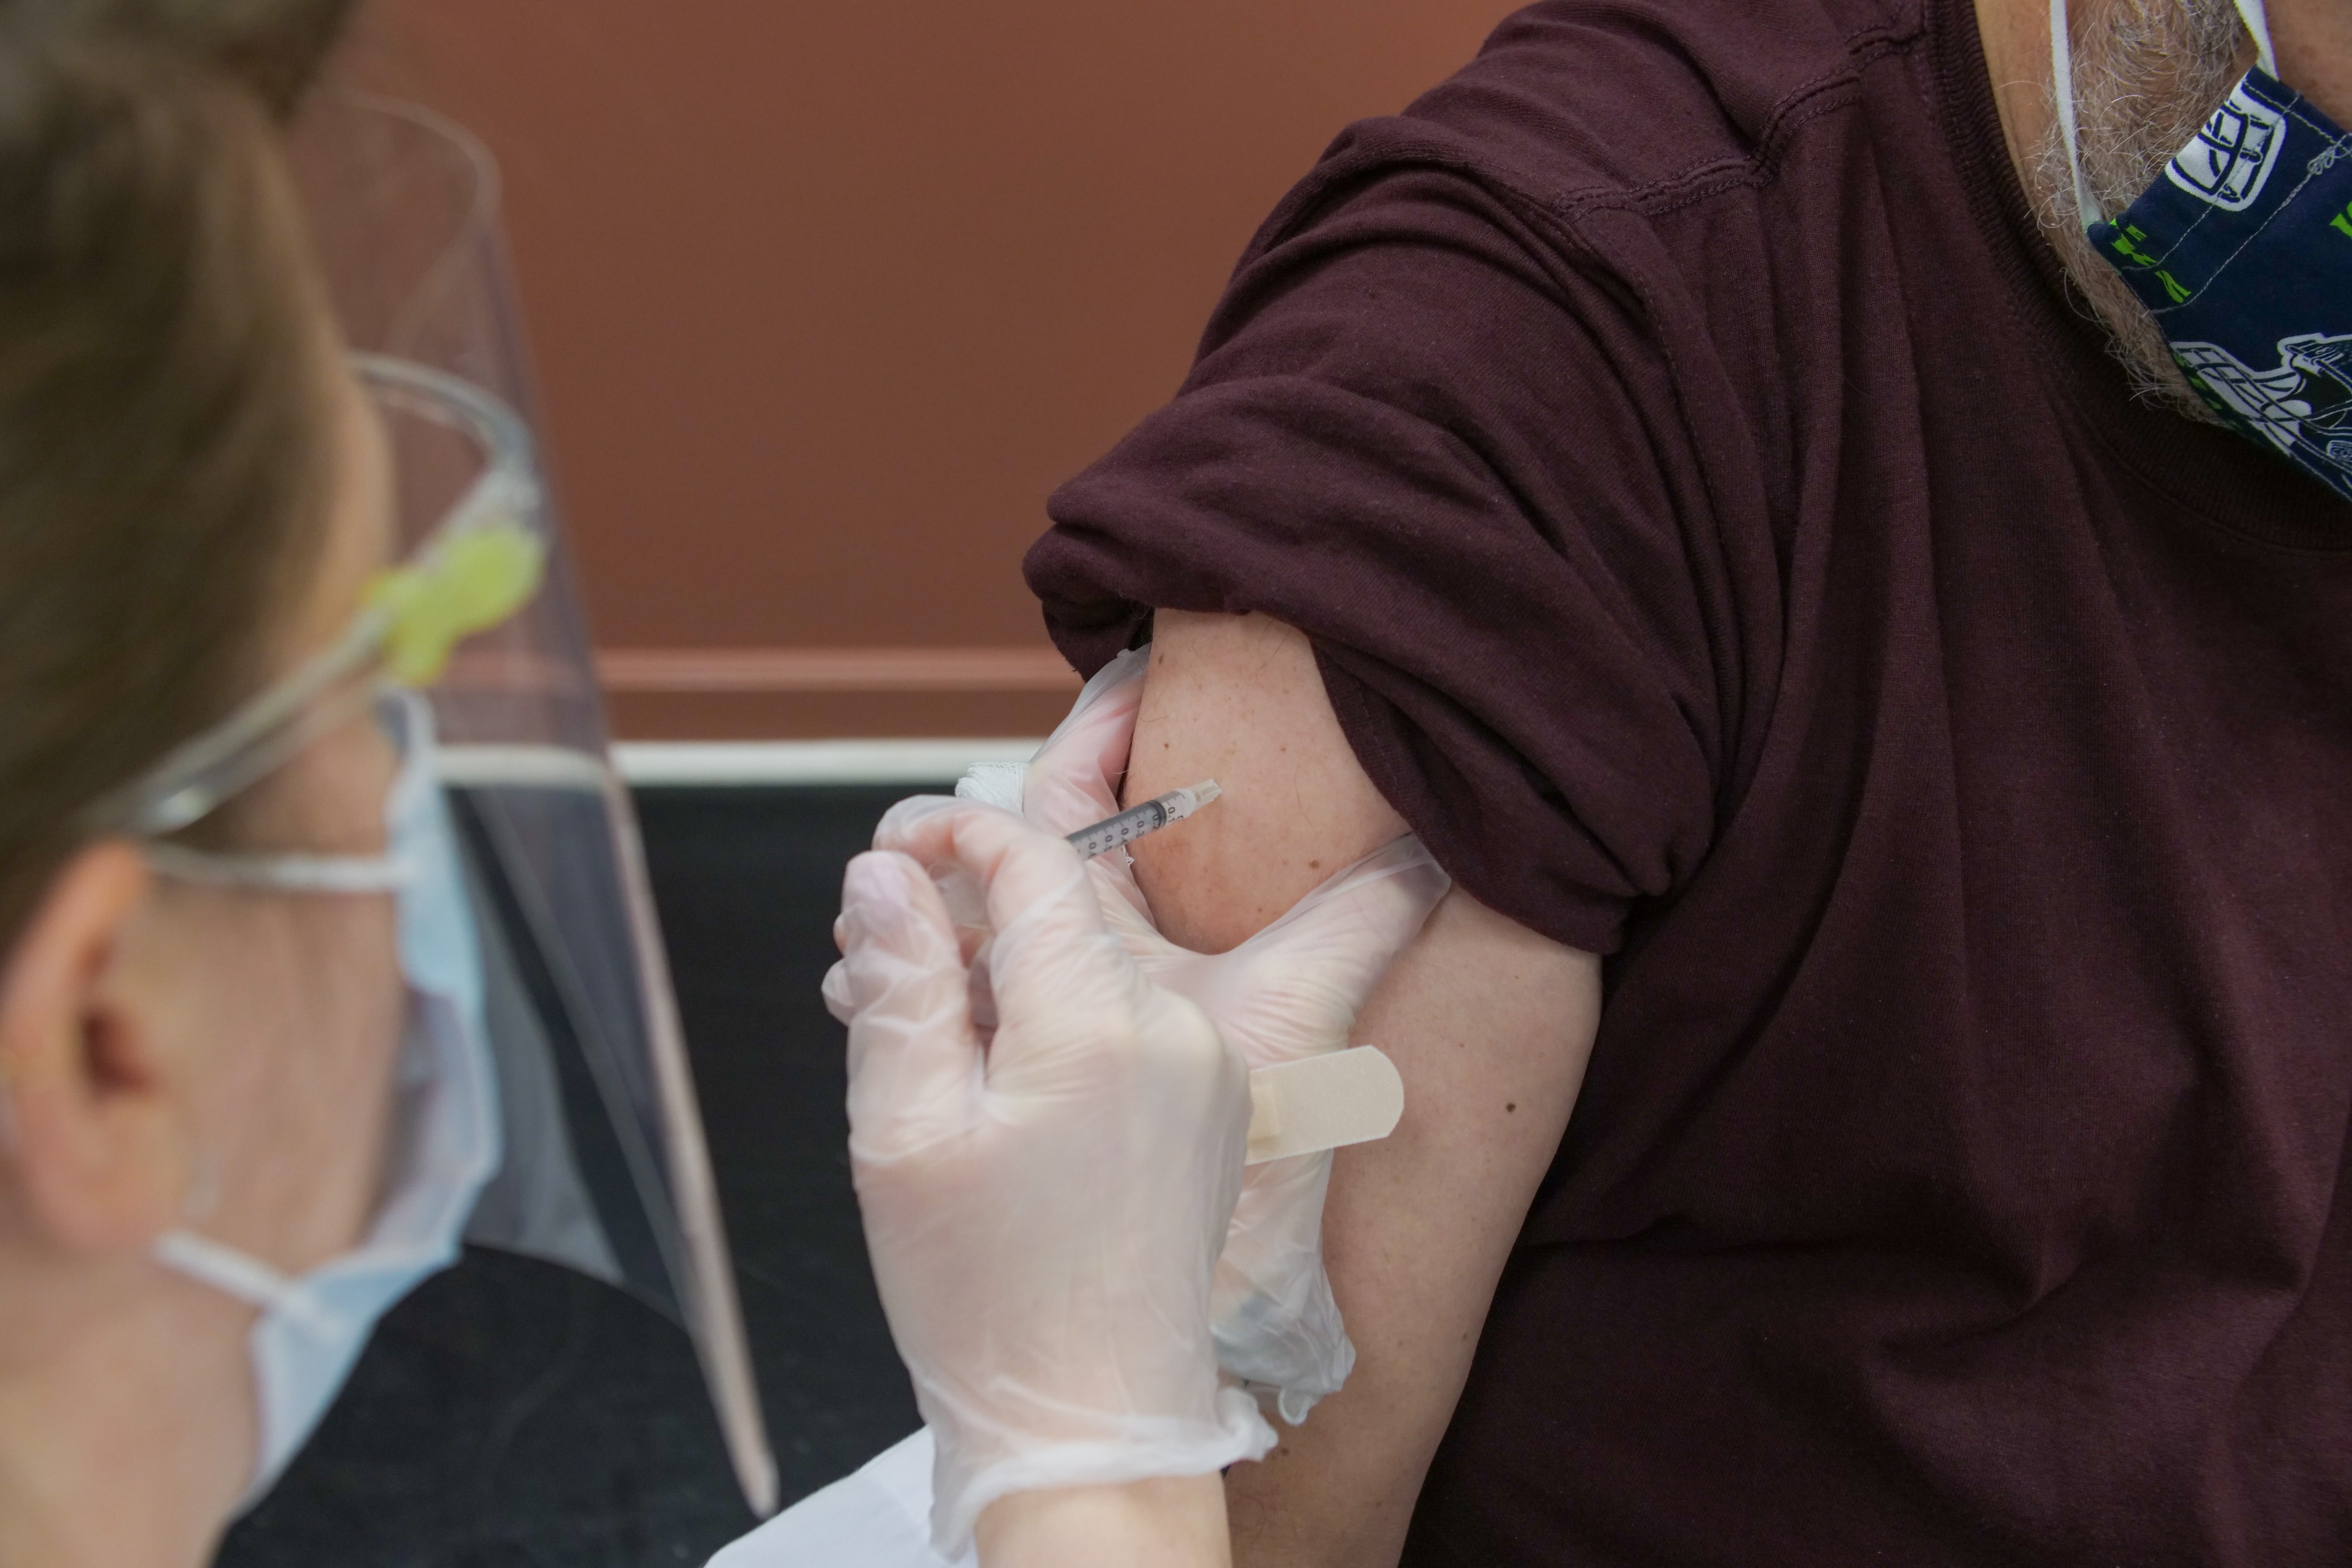 Universidade de Oxford inicia ensaio clínico com vacina contra o HIV (Foto: Steven Cornfield/Unsplash)